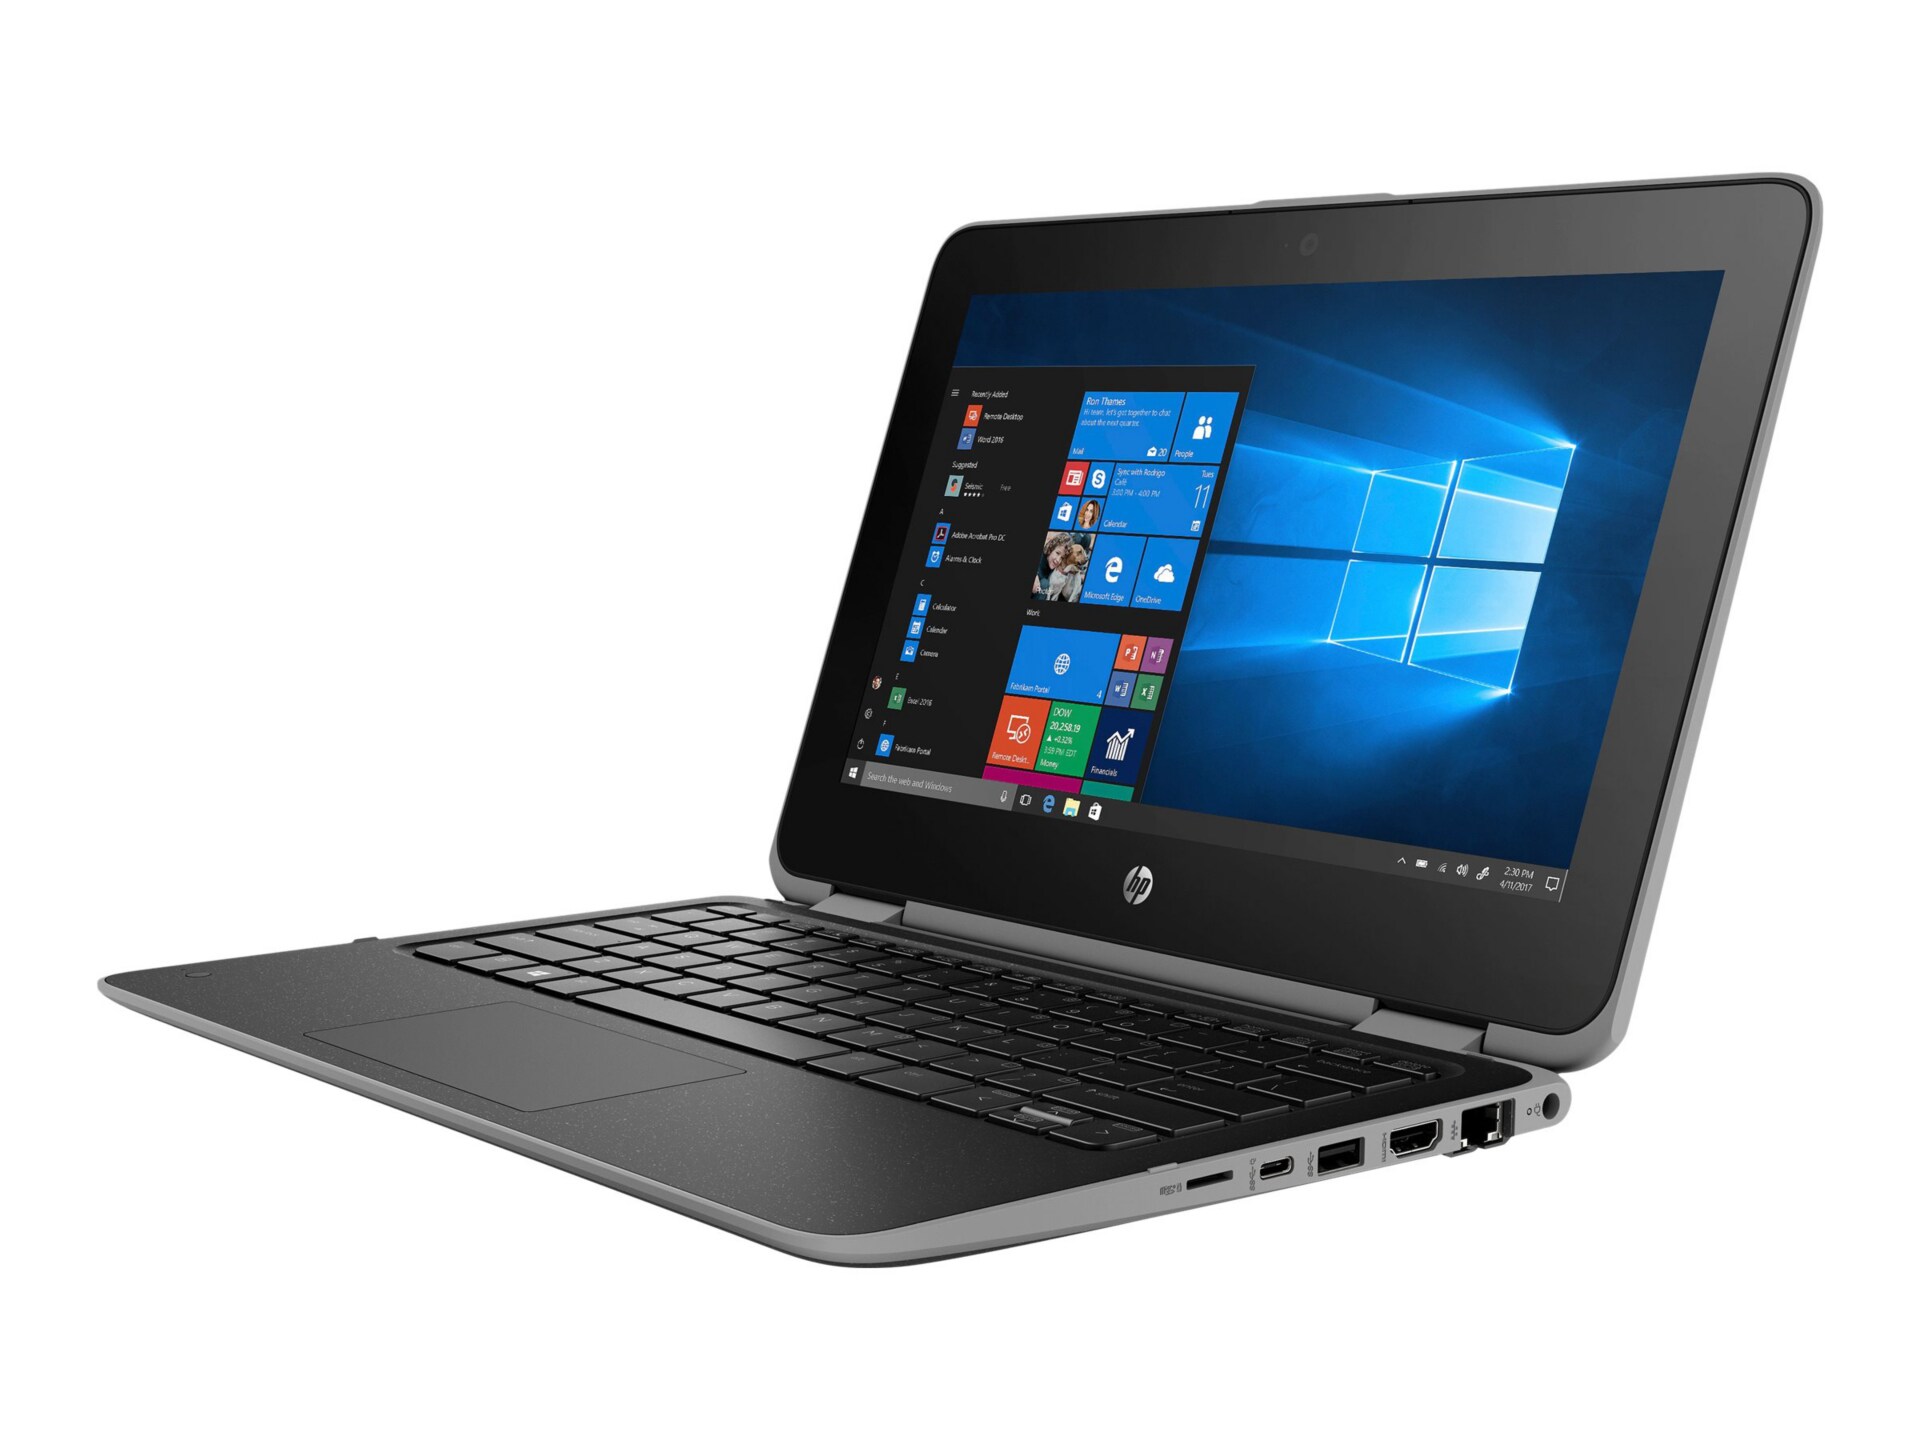 HP ProBook x360 11 G4 Core m3-8100Y 8GB RAM 128GB Windows 10 Home